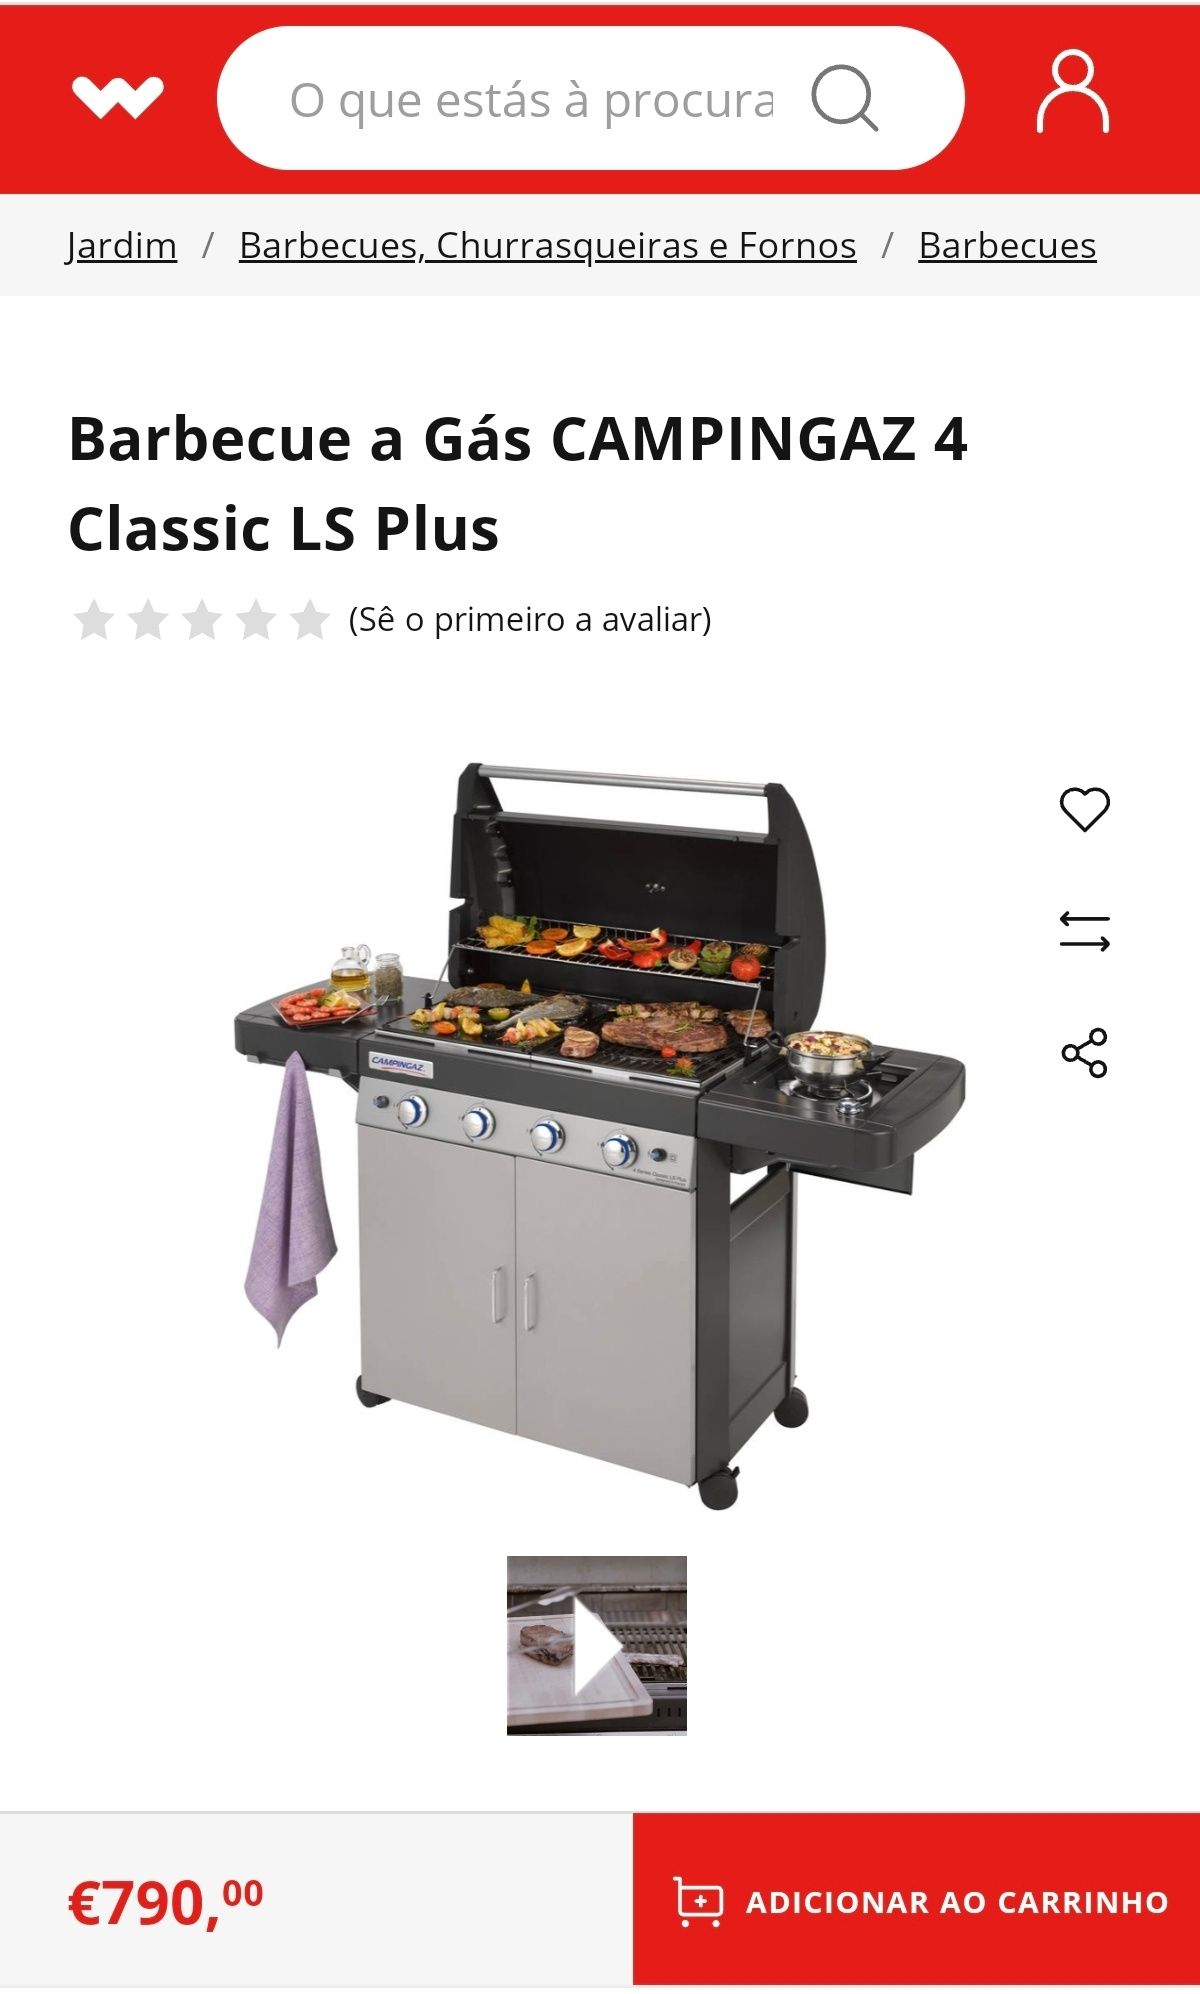 Barbecue a Gás CAMPINGAZ 4 Classic LS Plus